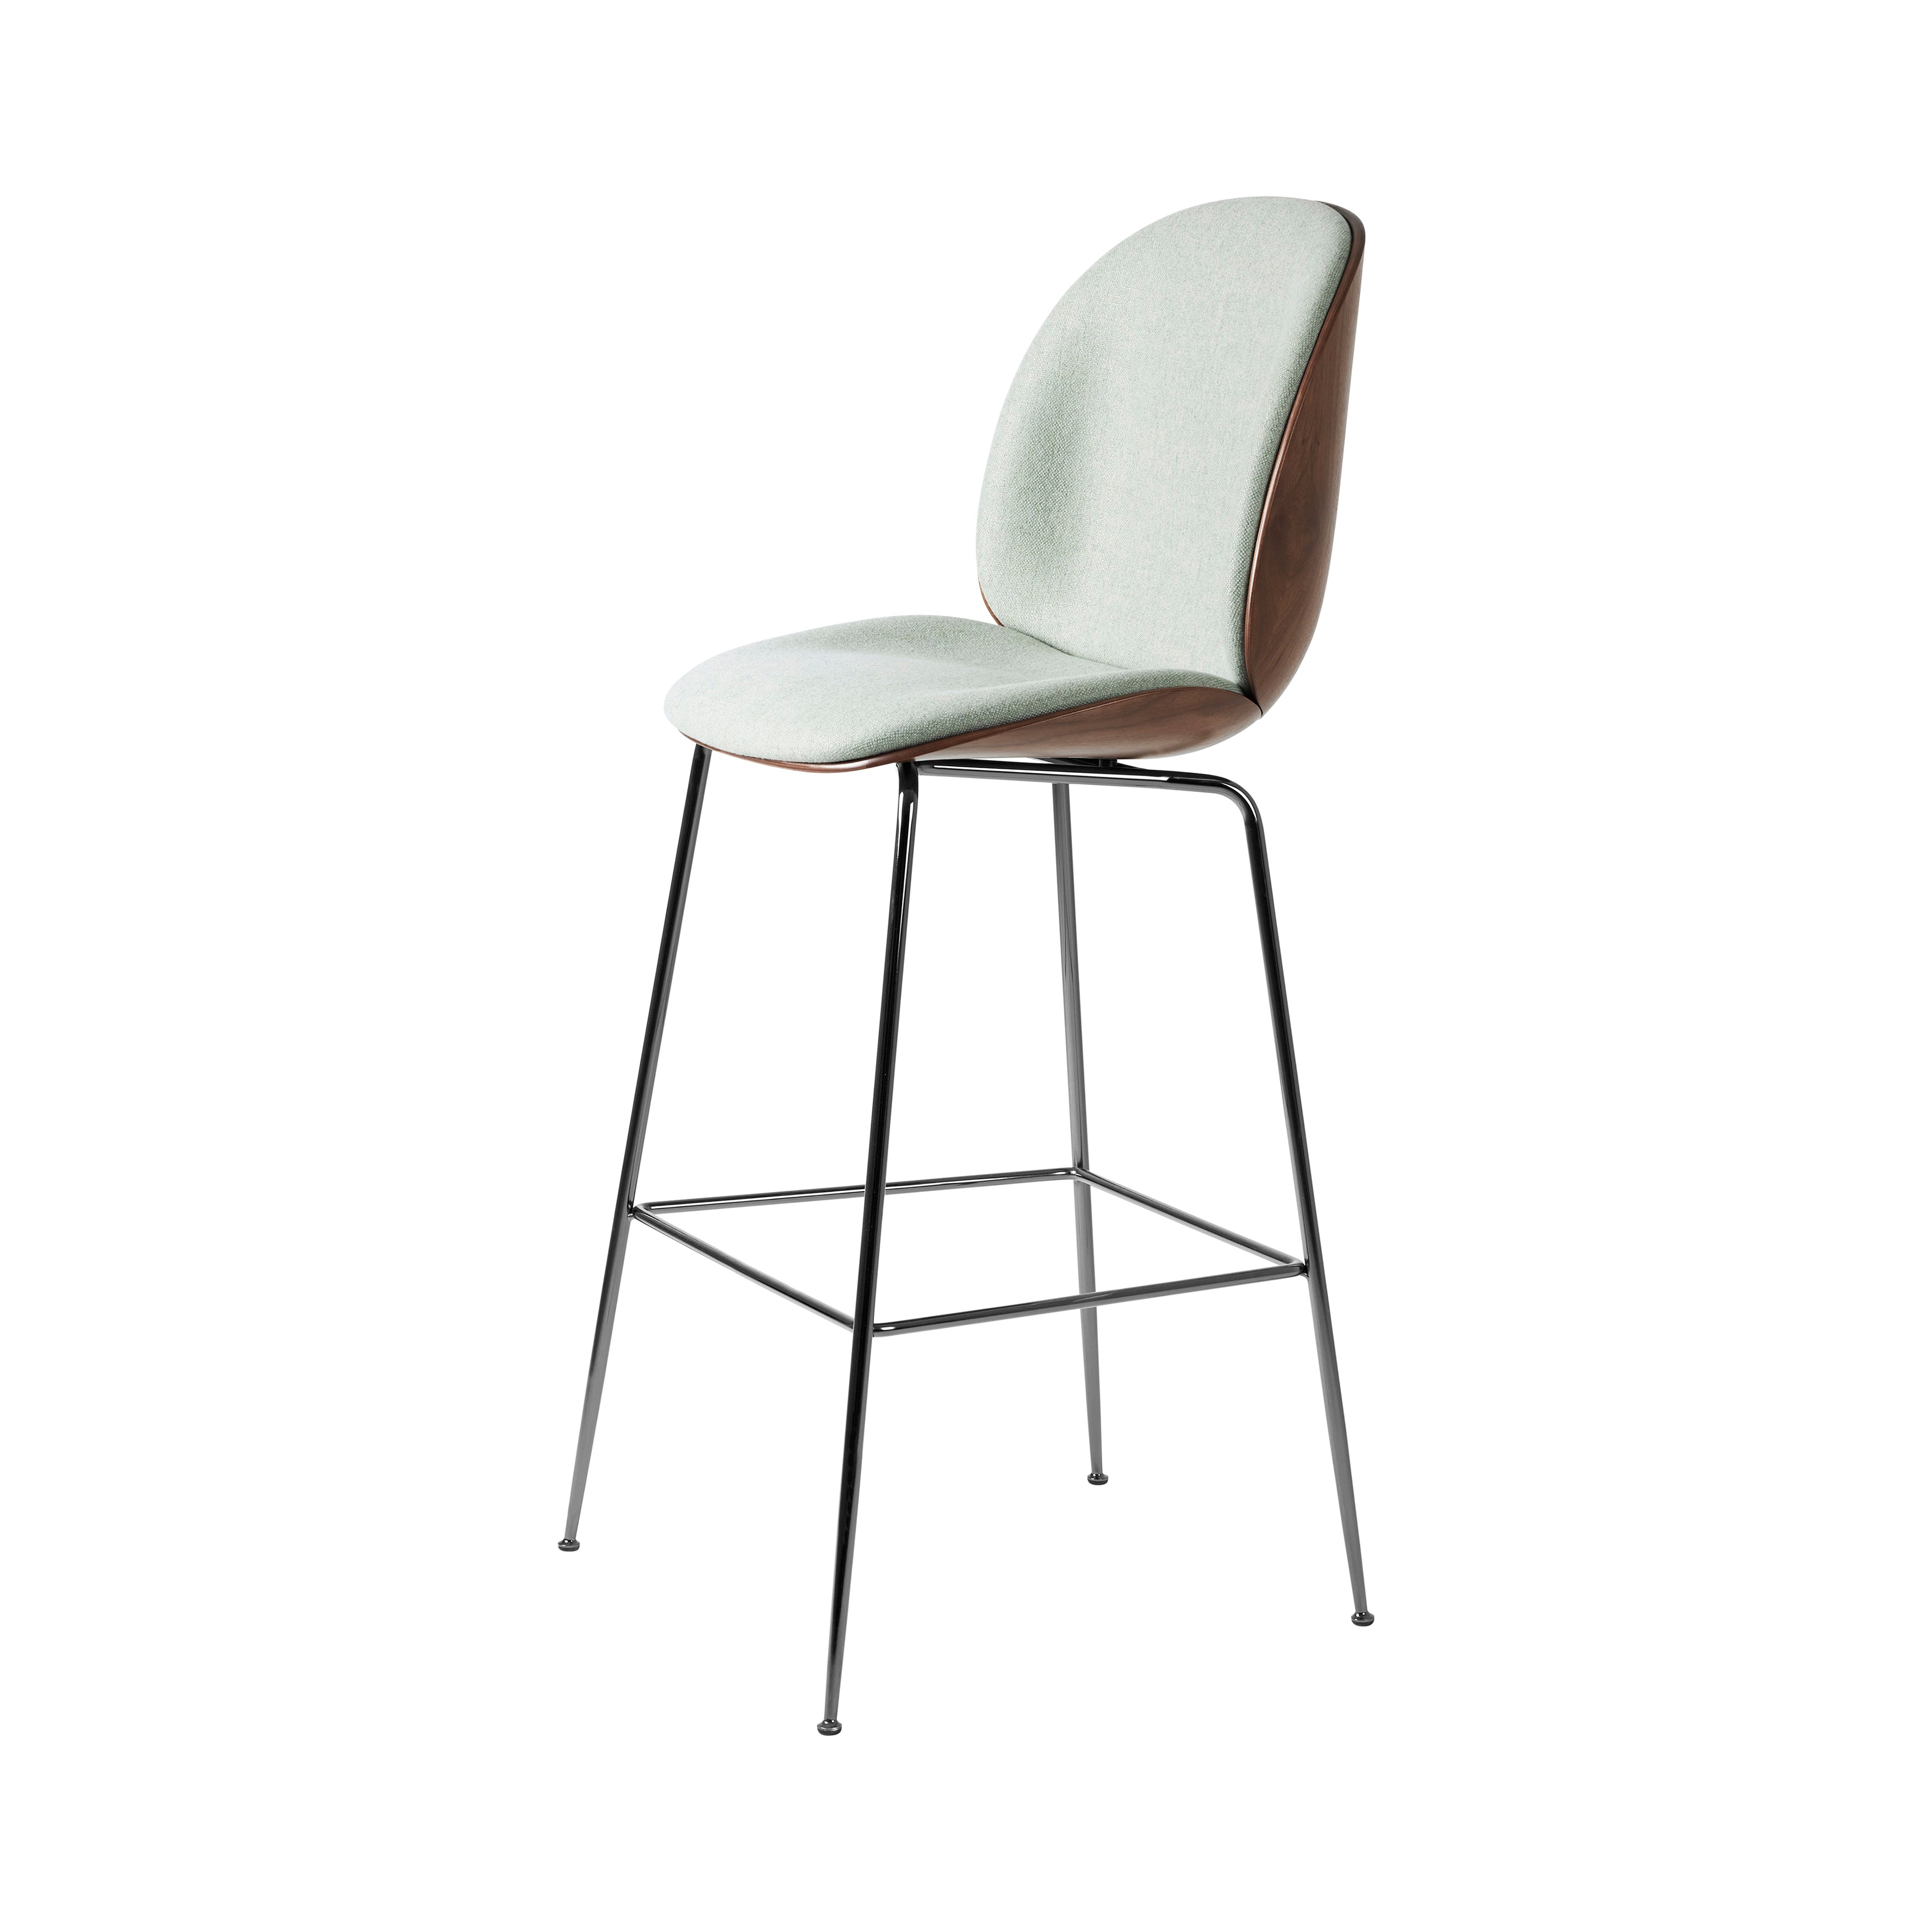 Beetle Bar Chair Conic Base: Veneer Shell + Front Upholstered + Black Chrome